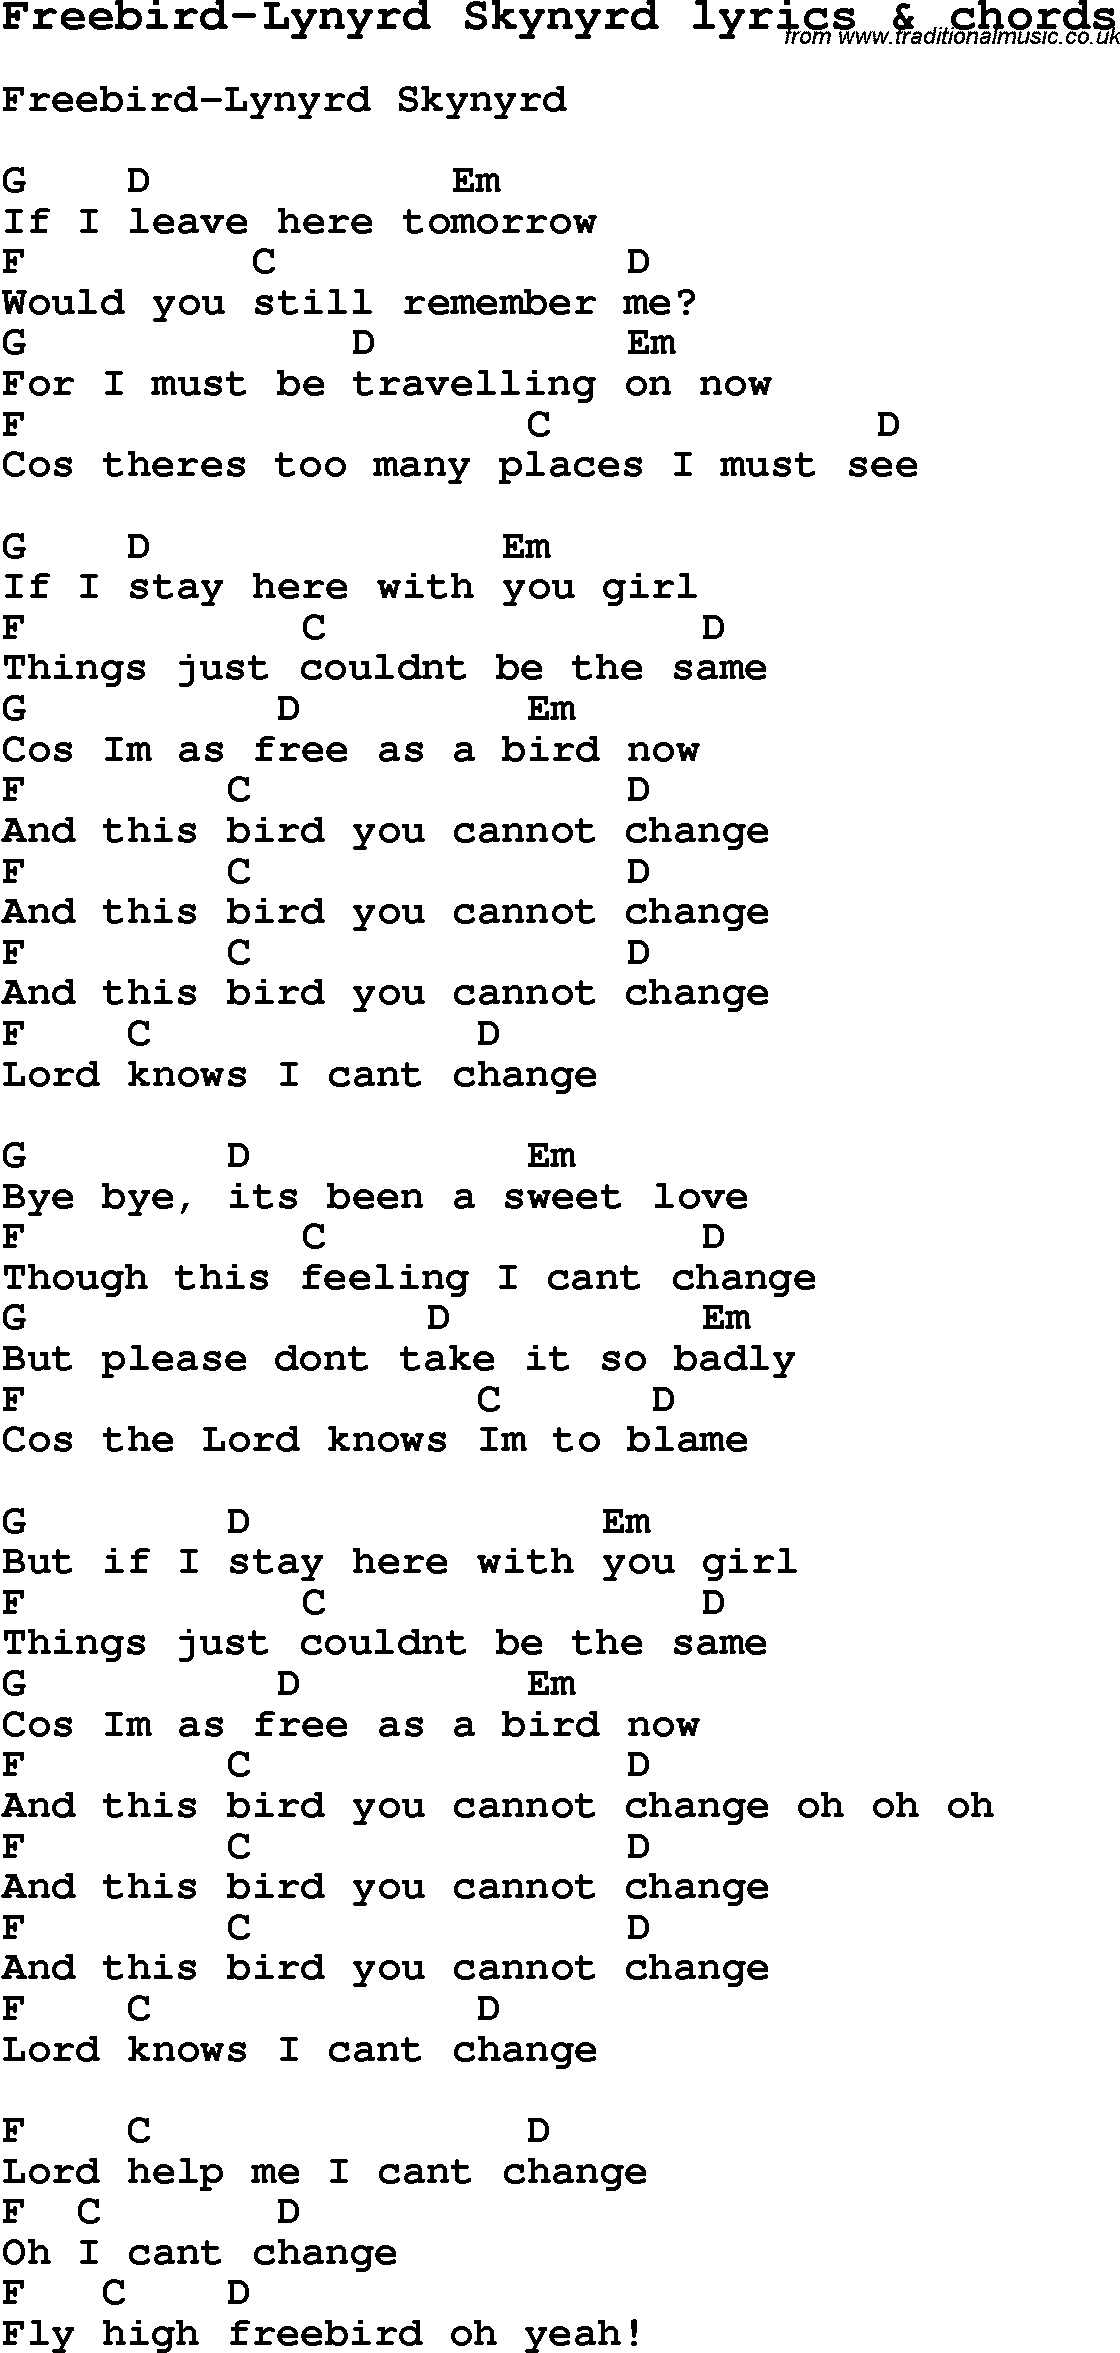 Love Song Lyrics for: Freebird-Lynyrd Skynyrd with chords for Ukulele, Guitar Banjo etc.